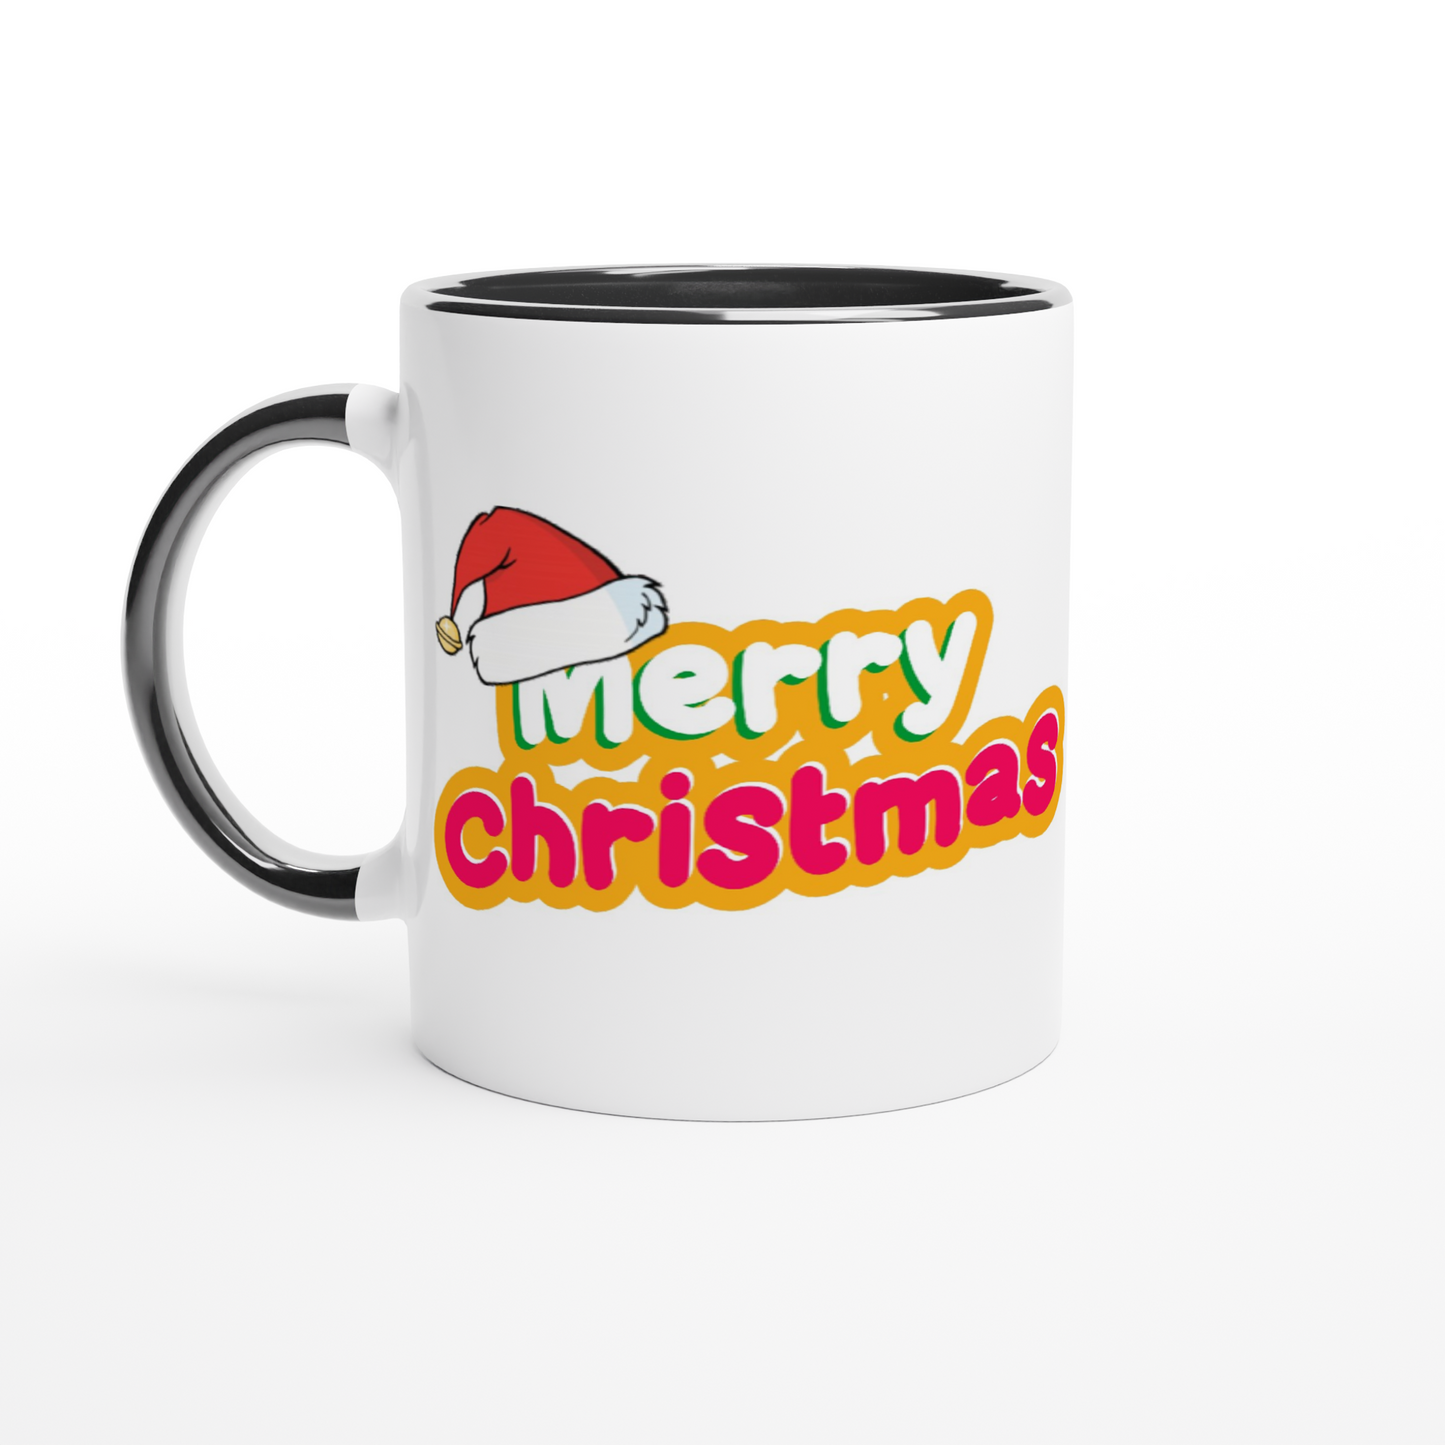 Santa's Merry Christmas Ceramic Mug